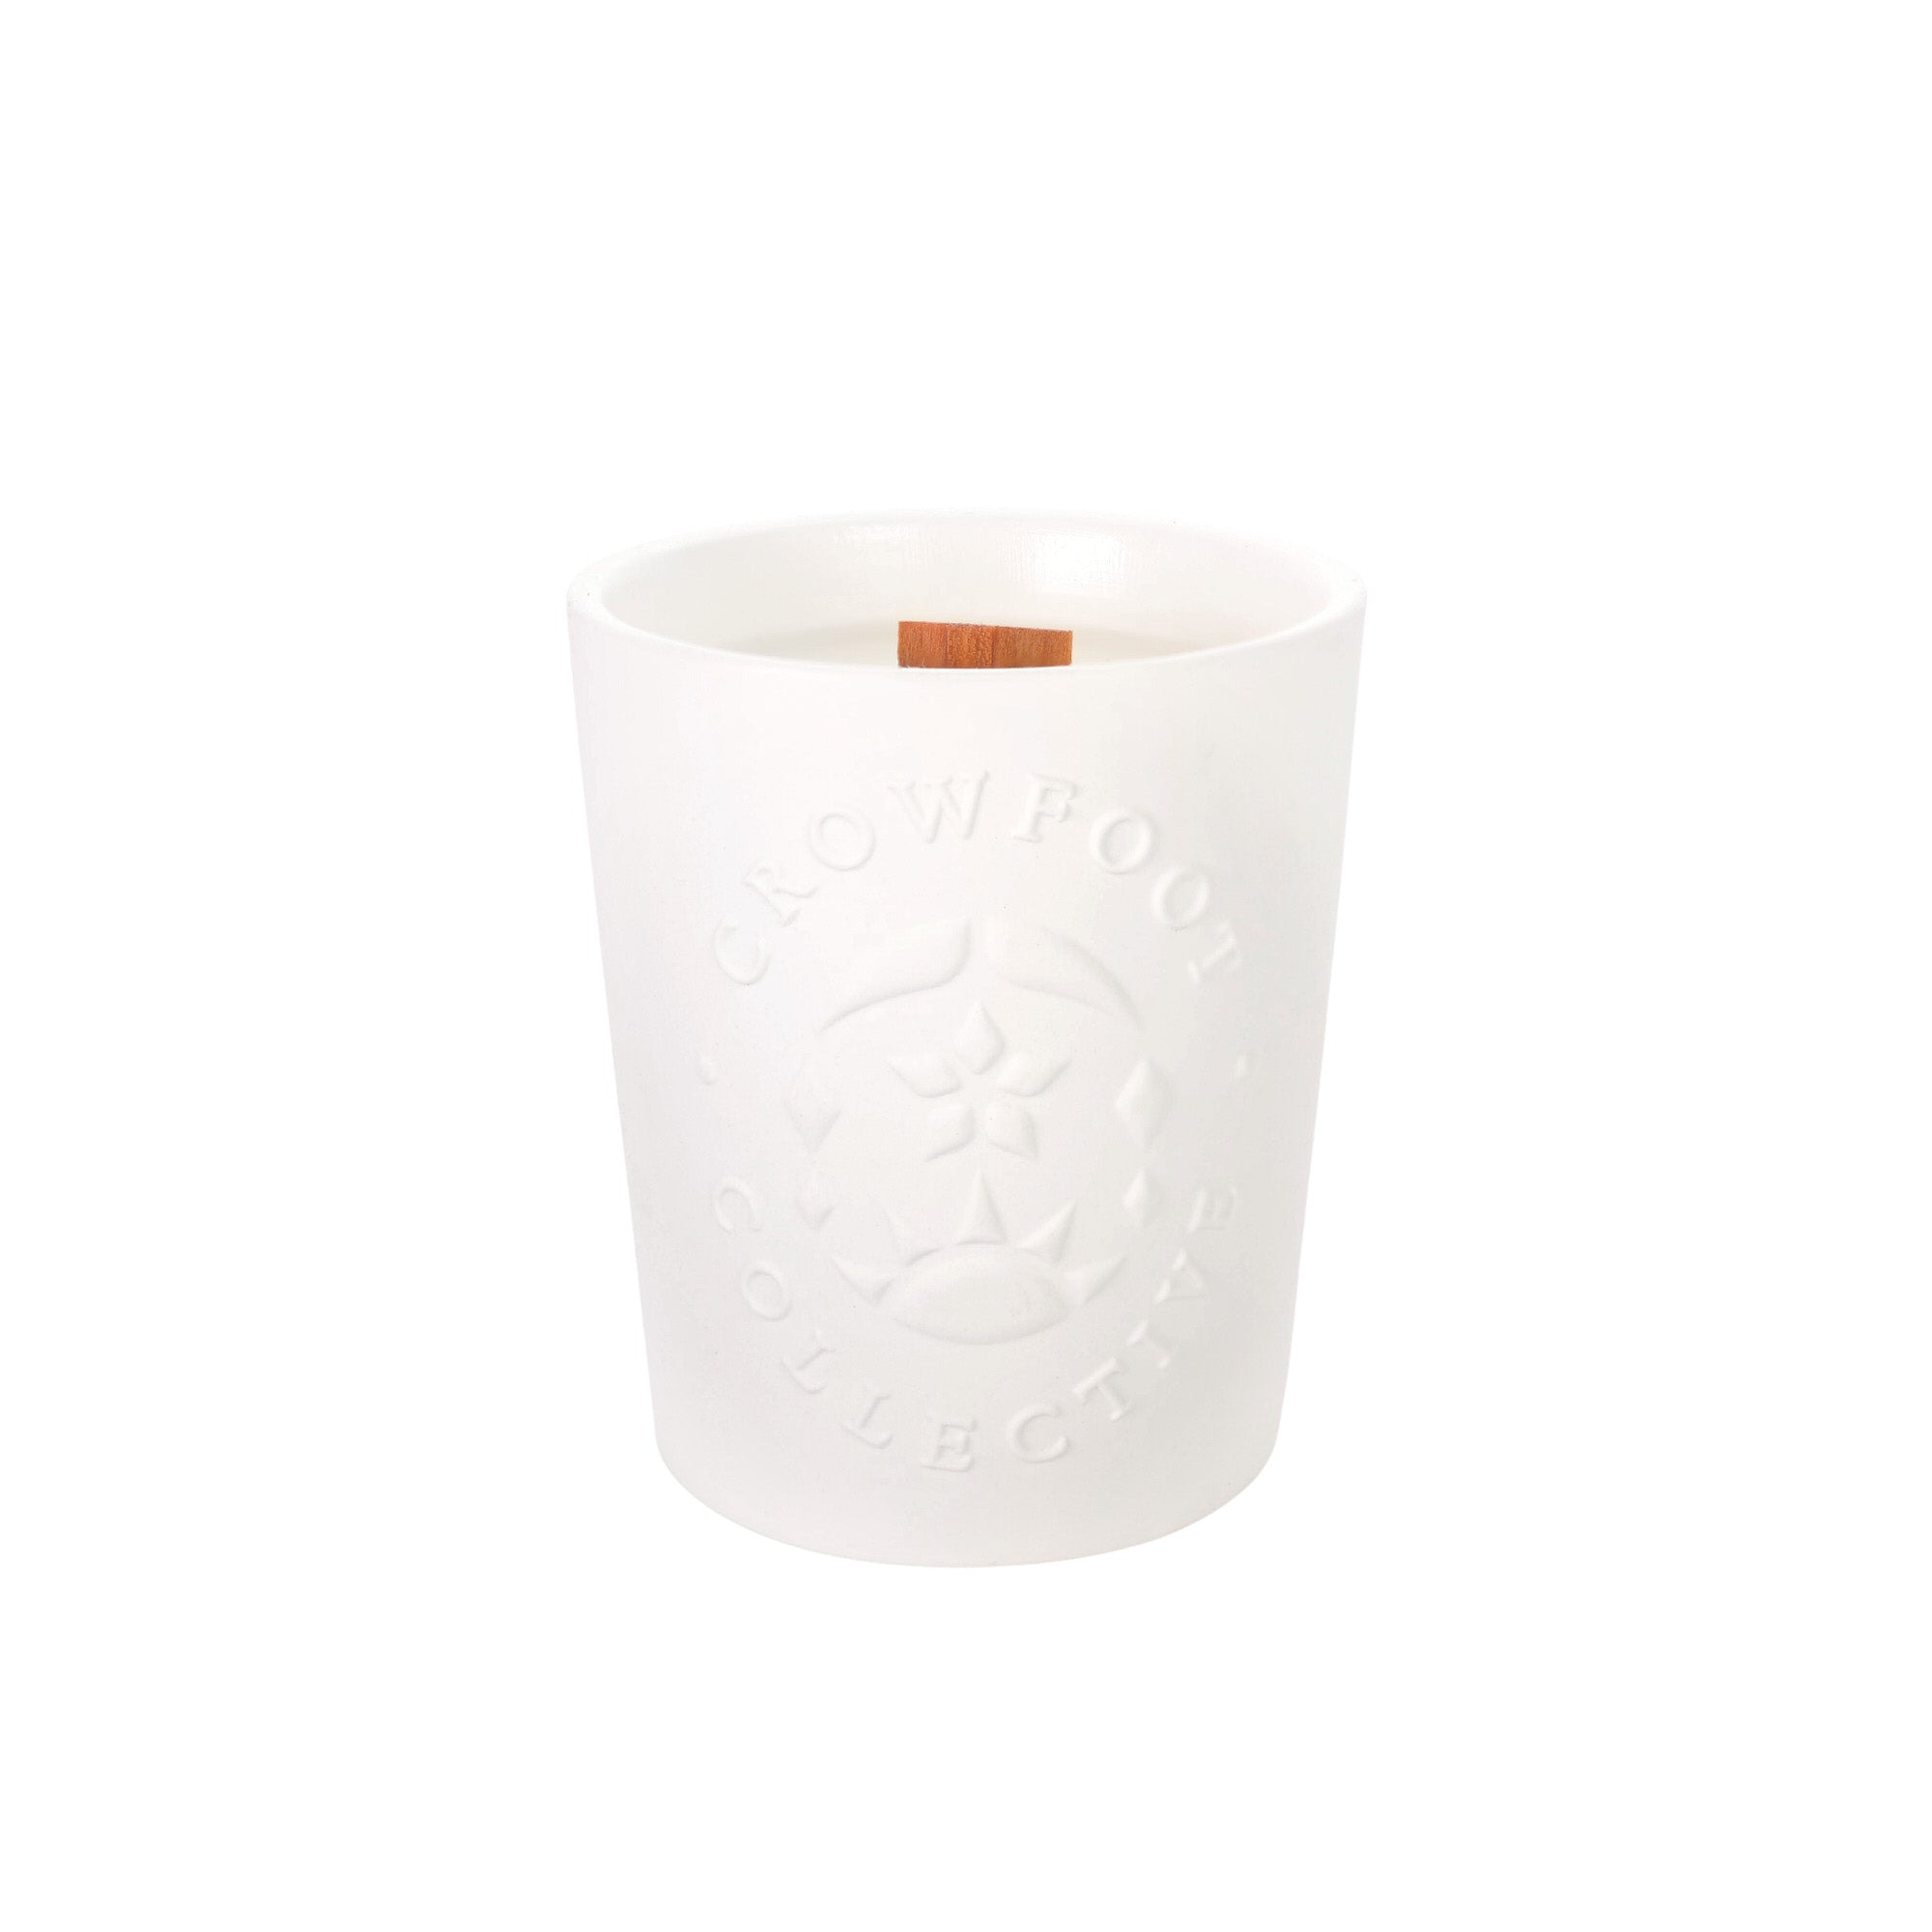 ISSTOYII OKI' KAAN - GATHER - Ceramic Candle